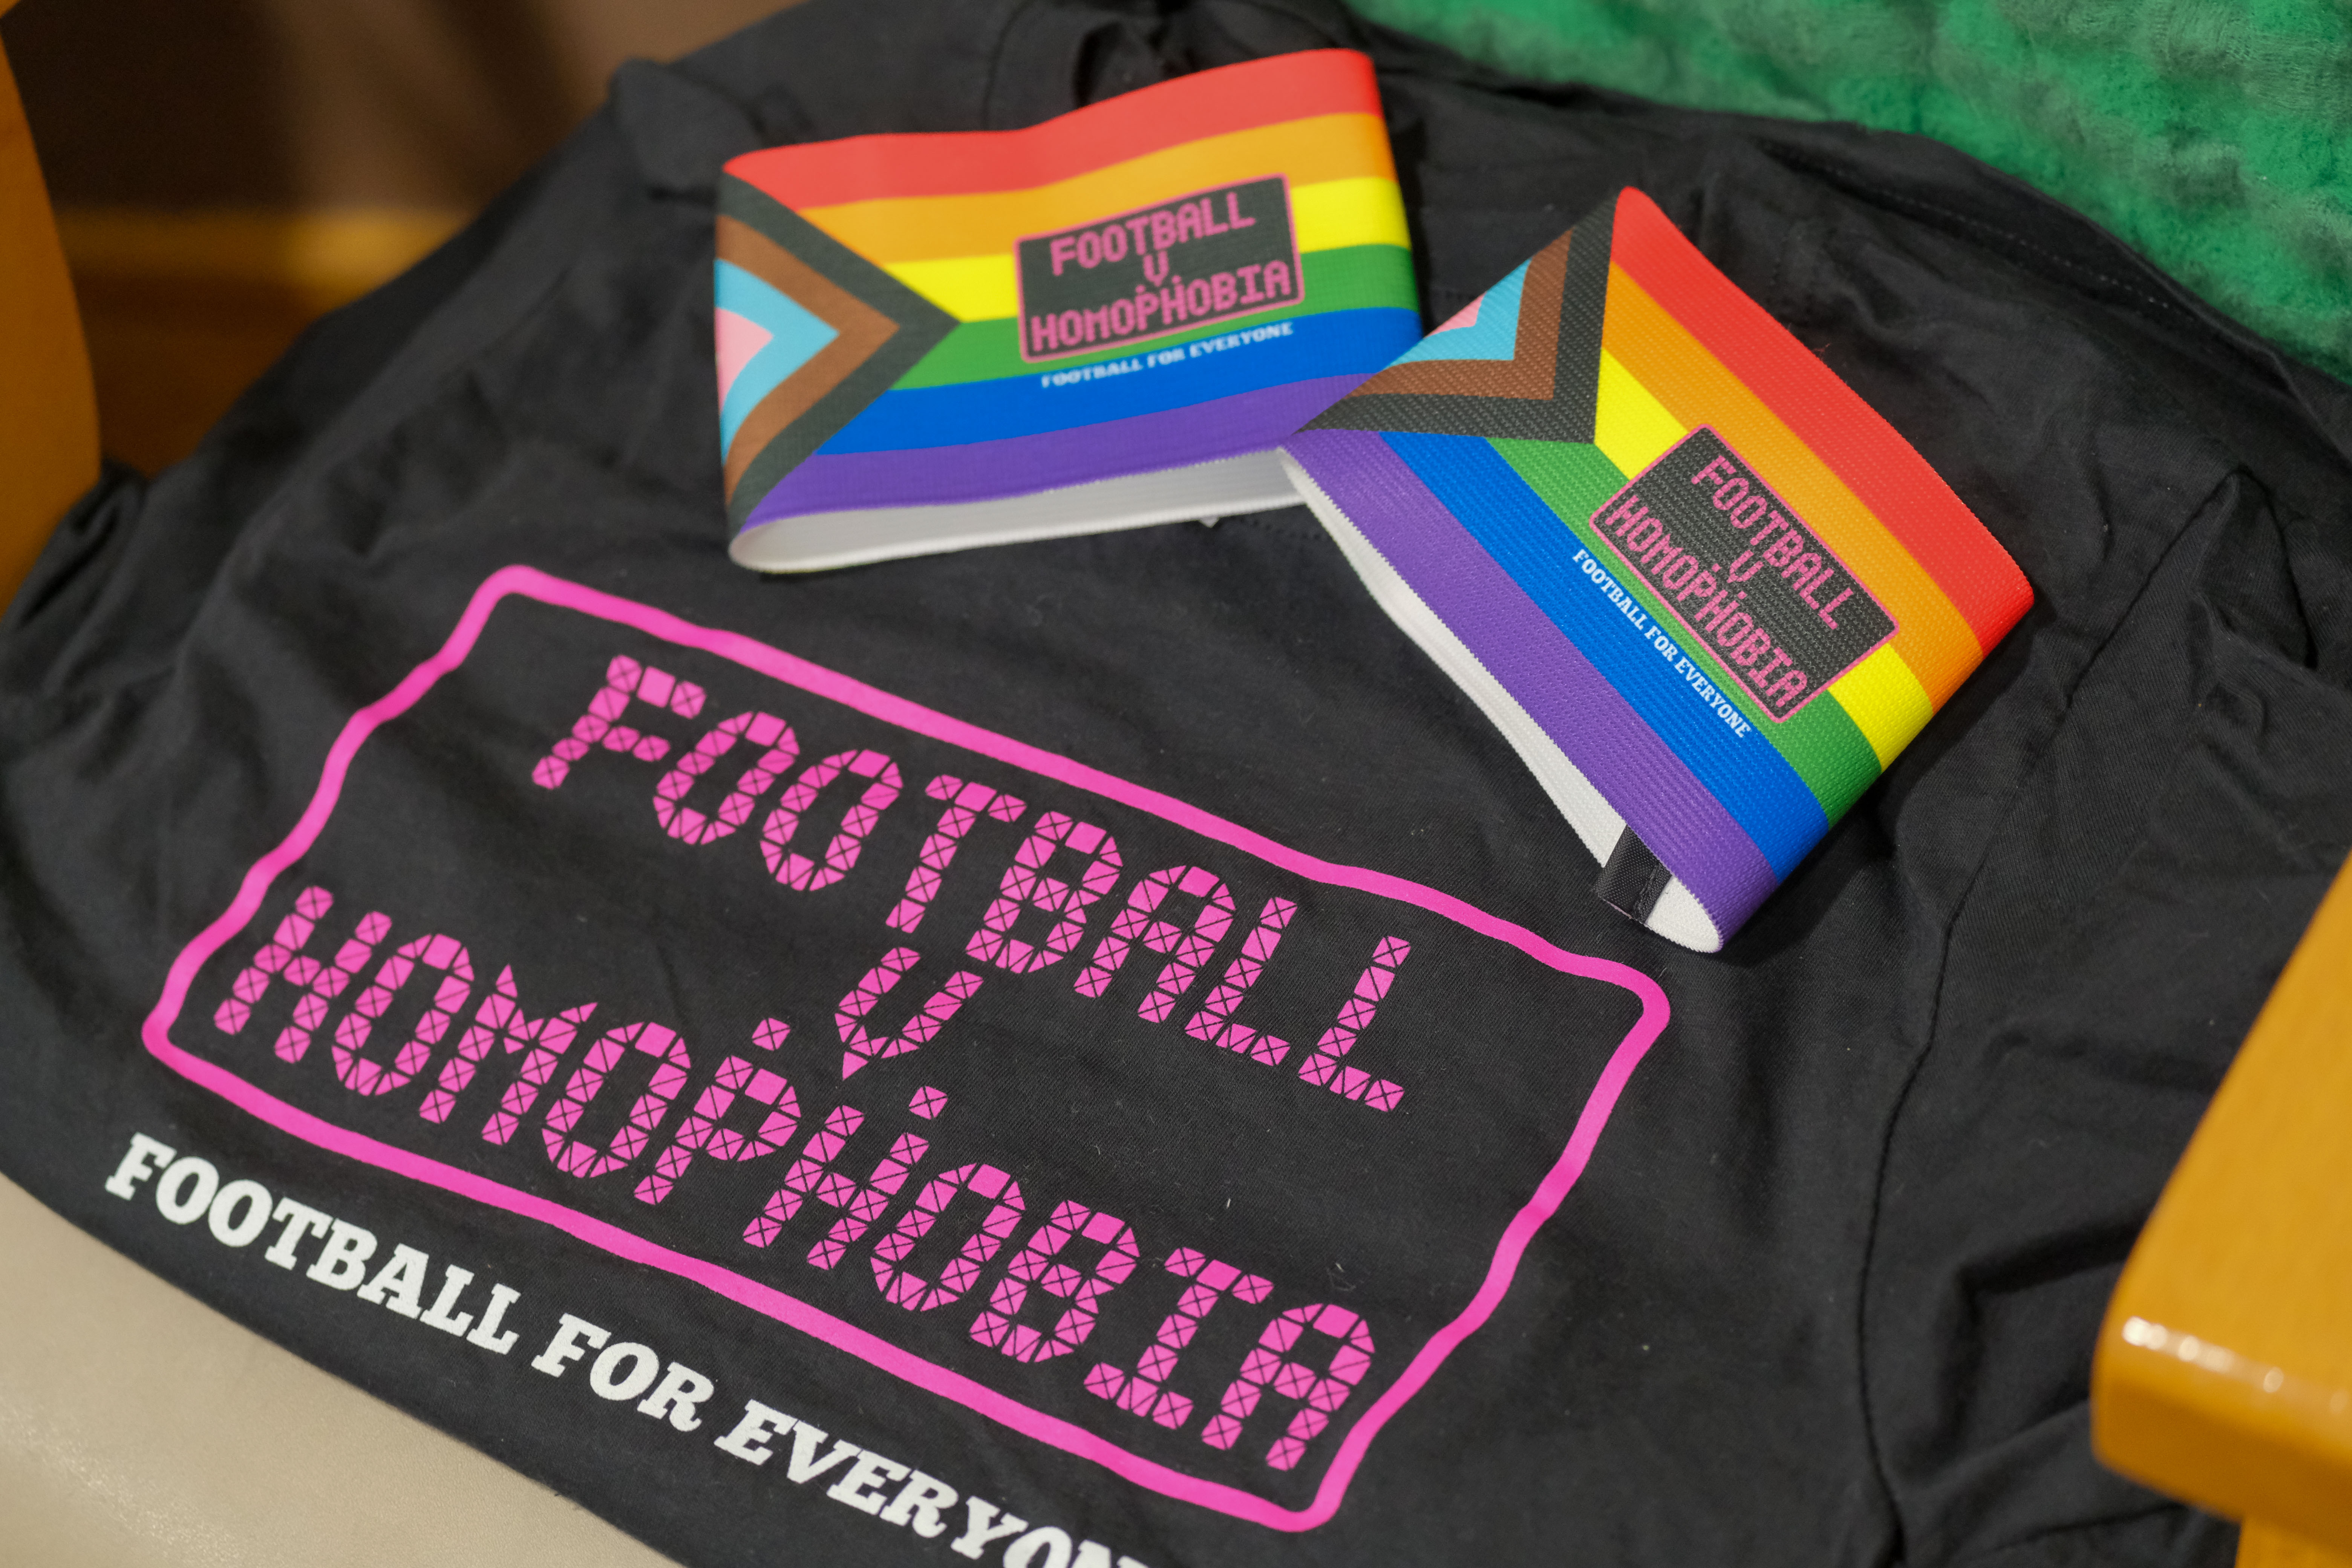 Football V Homophobia branded t-shirt & rainbow armband